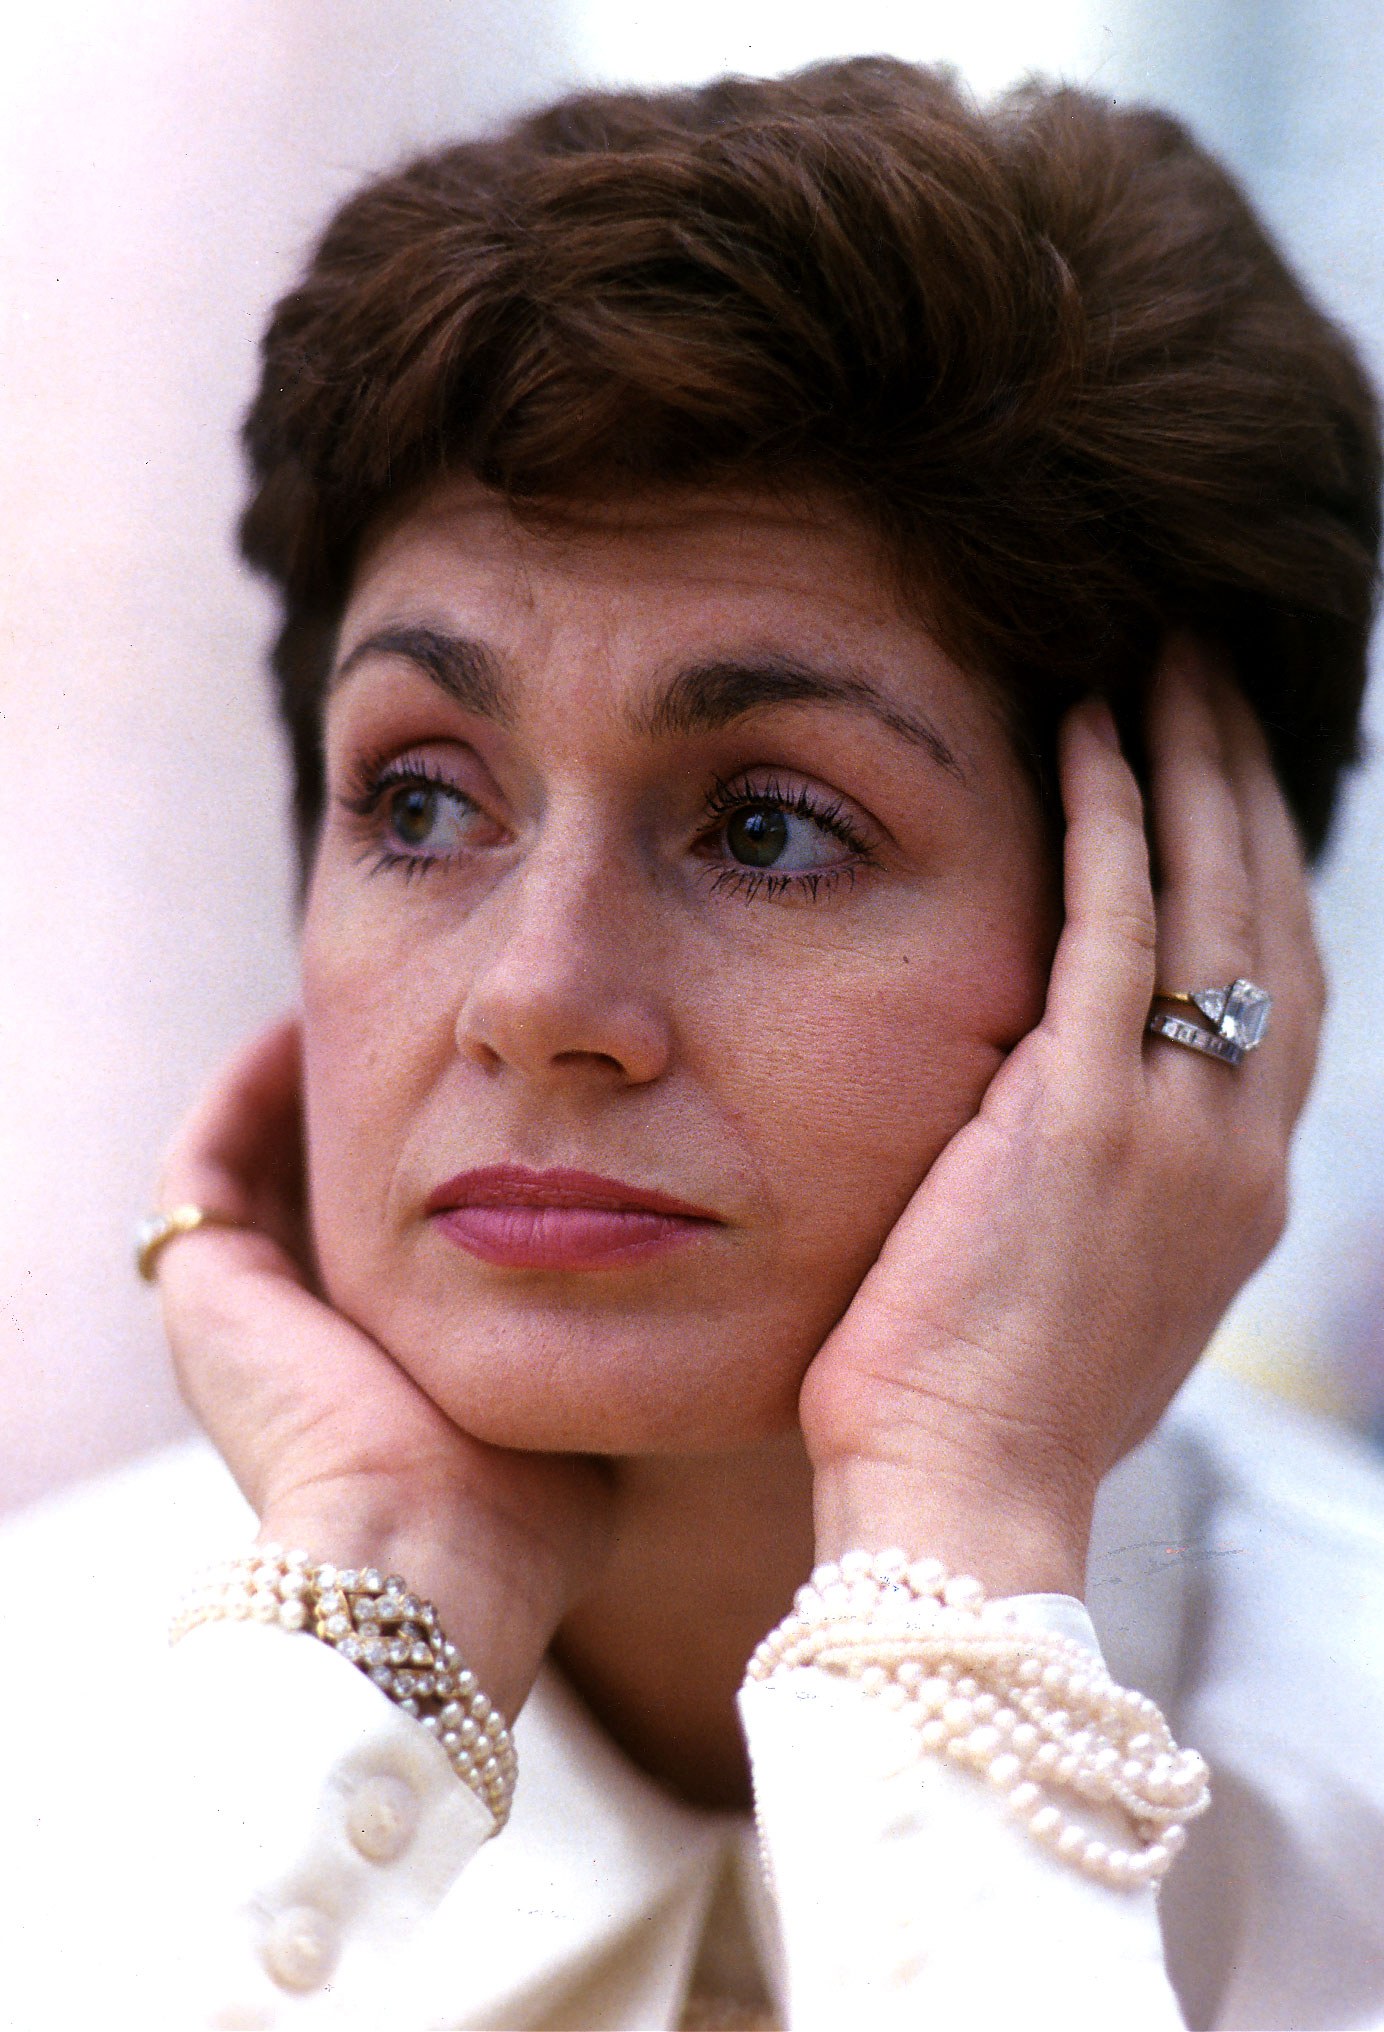 Sharon Osbourne am 11. August 1989 | Quelle: Getty Images